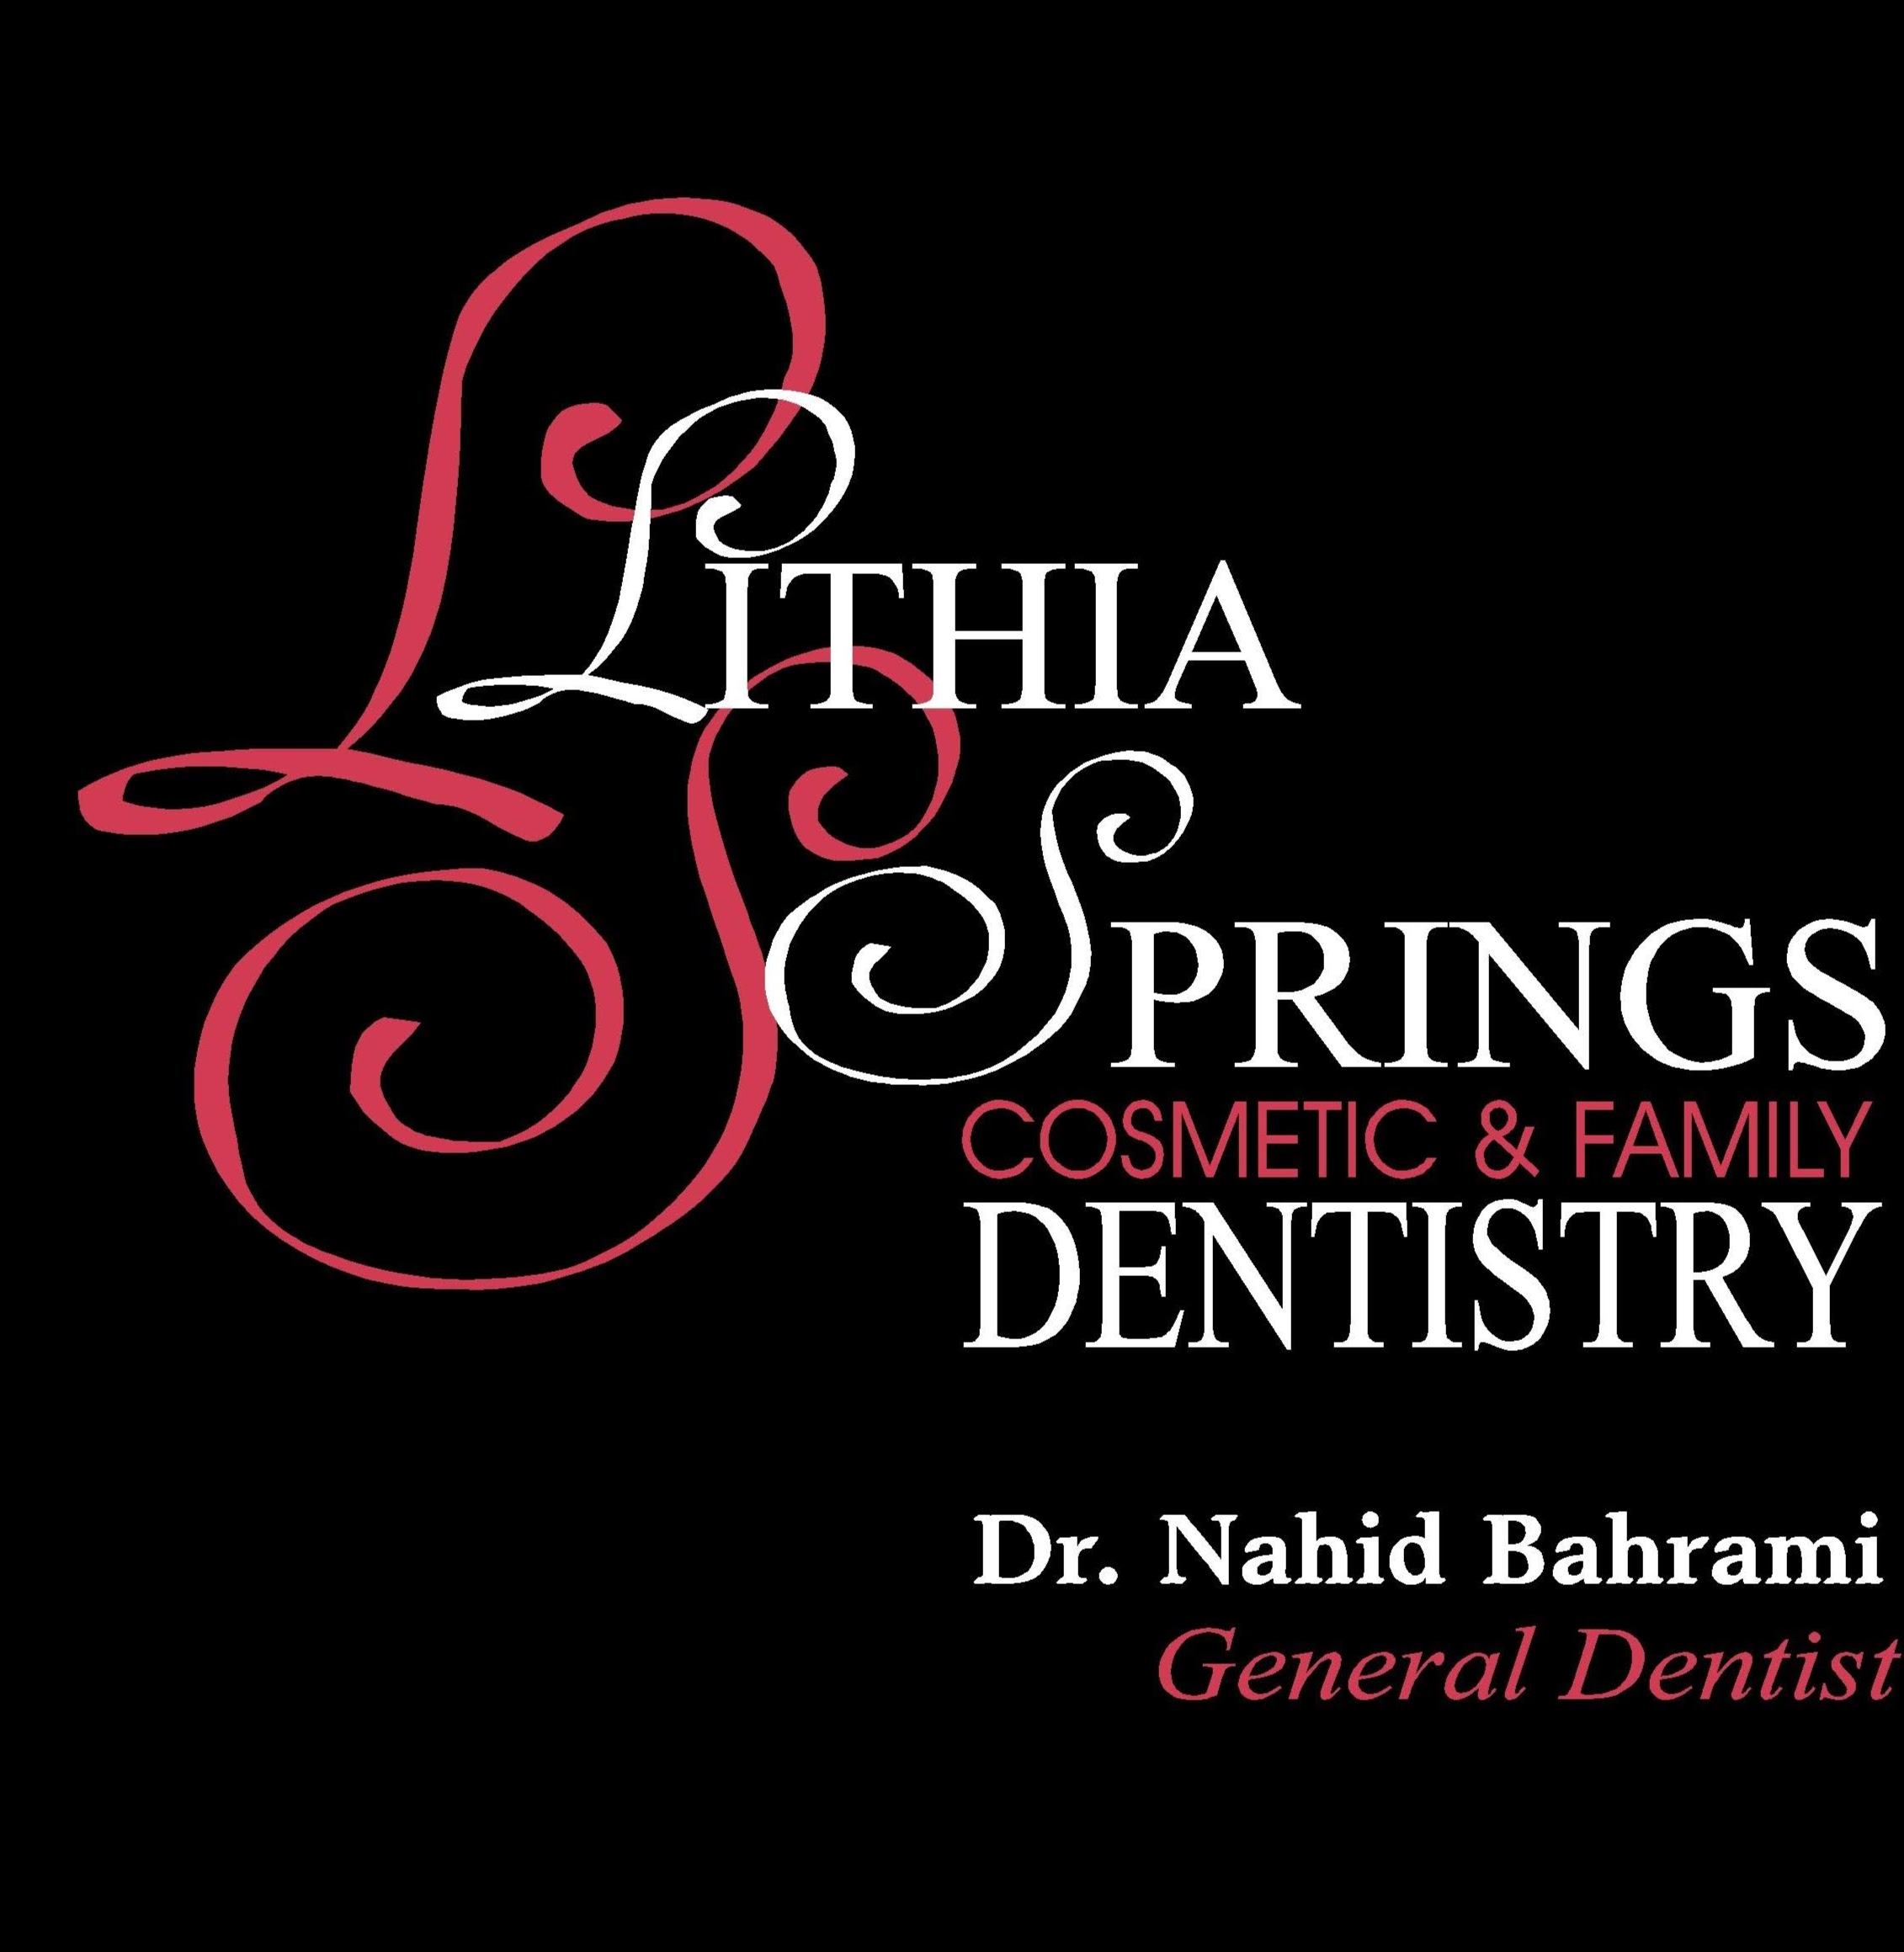 Lithia Springs Cosmetic & Family Dentistry